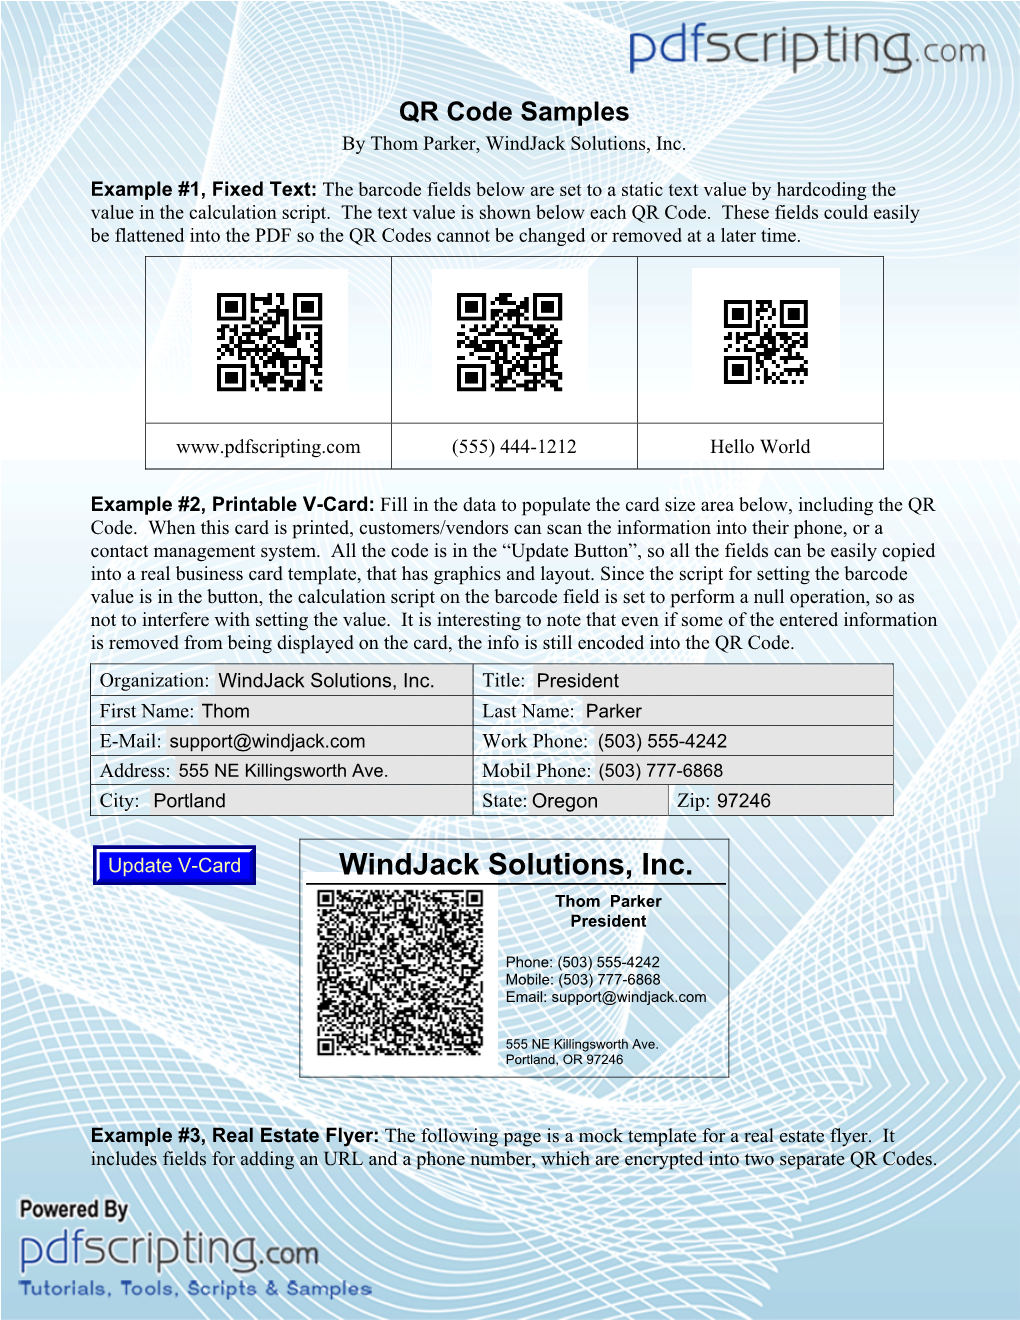 QR Code Samples by Thom Parker, Windjack Solutions, Inc